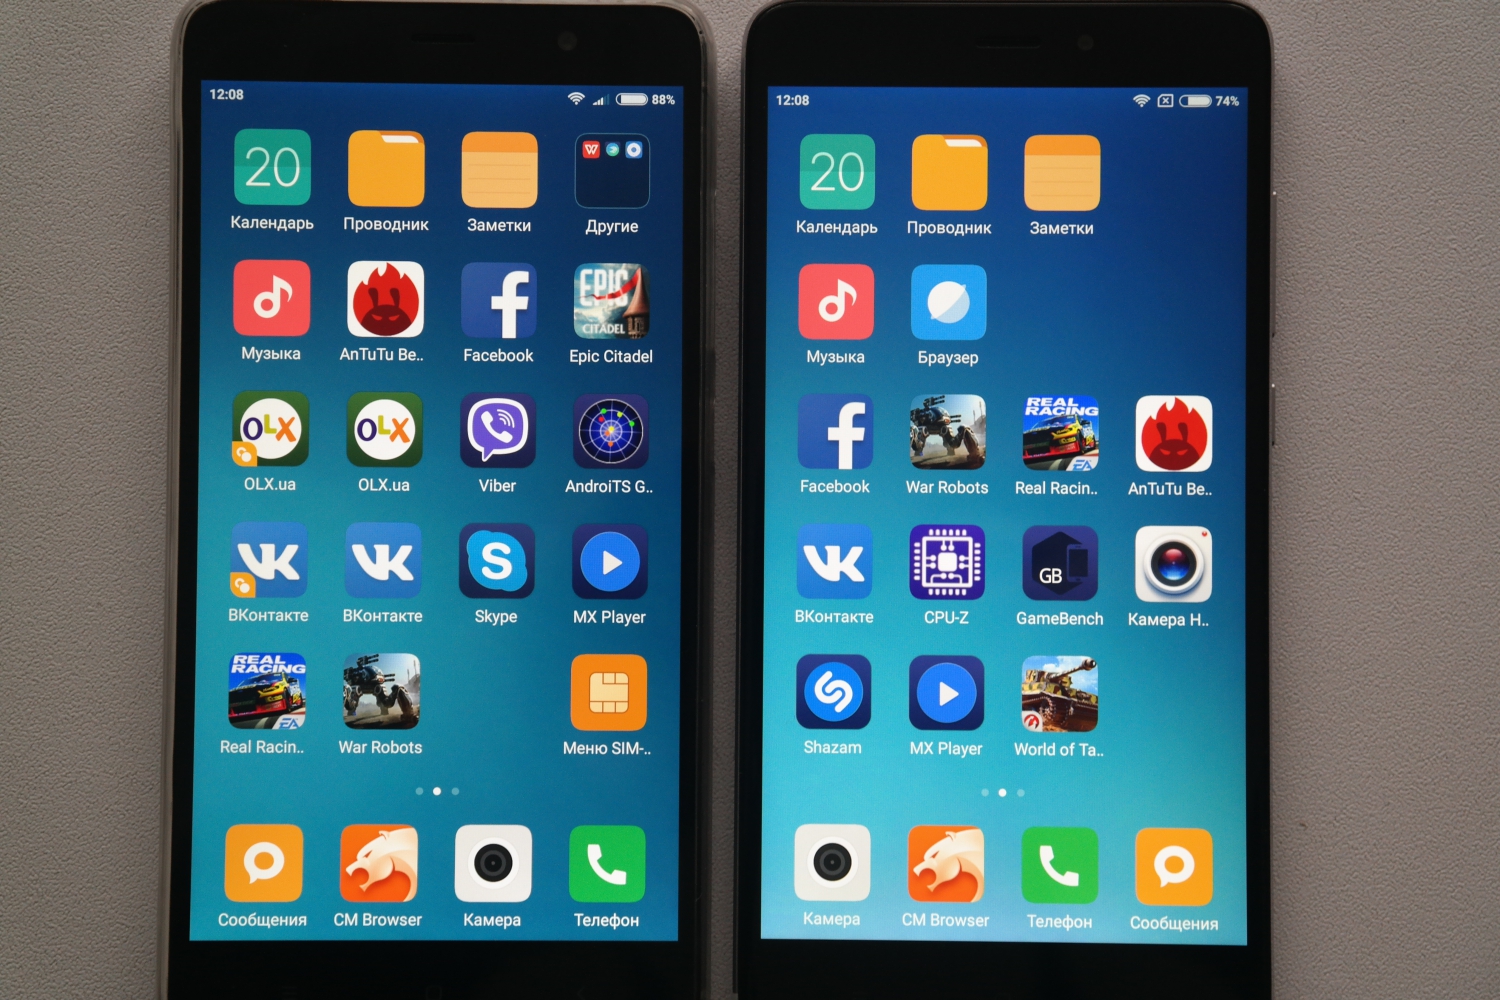 Отличие Xiaomi Redmi Note 4